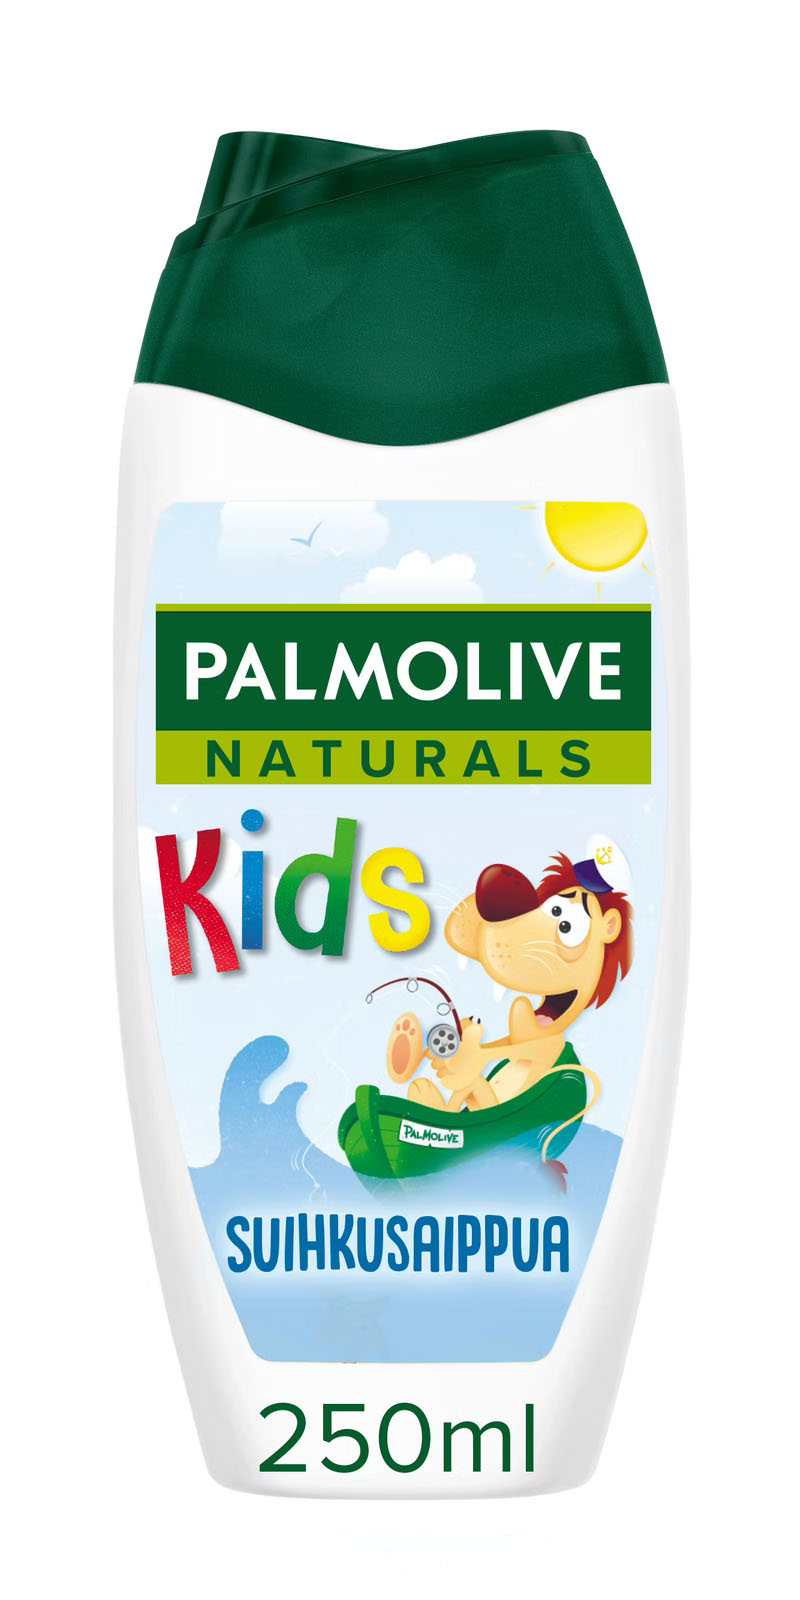 Palmolive Kids shower soap 250ml